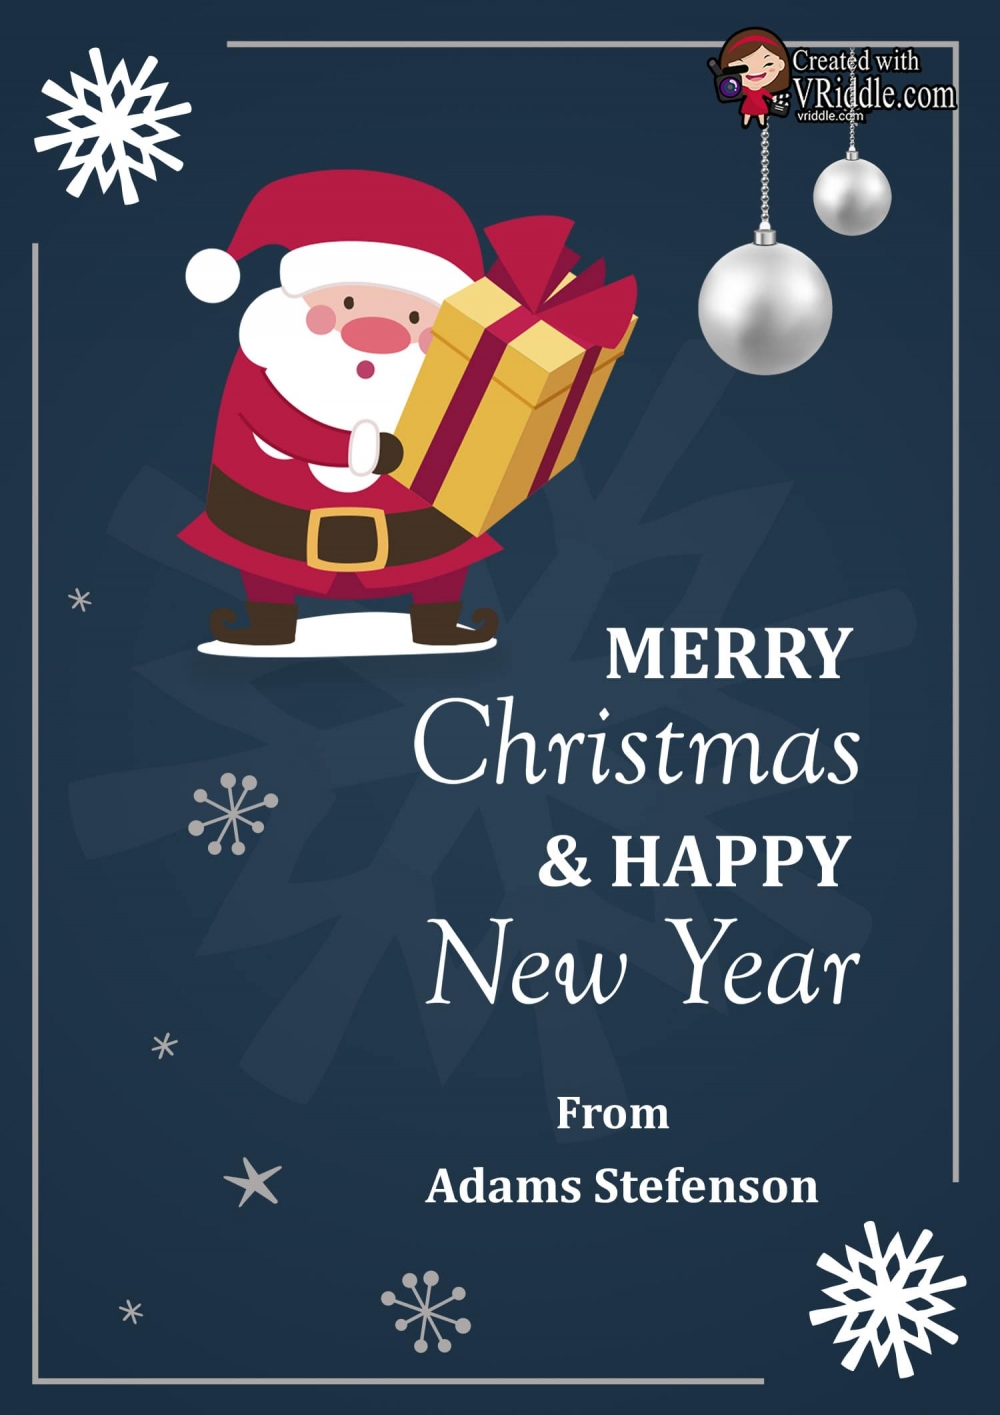 Happy Christmas Blue Theme Christmas Greeting Card With Santa